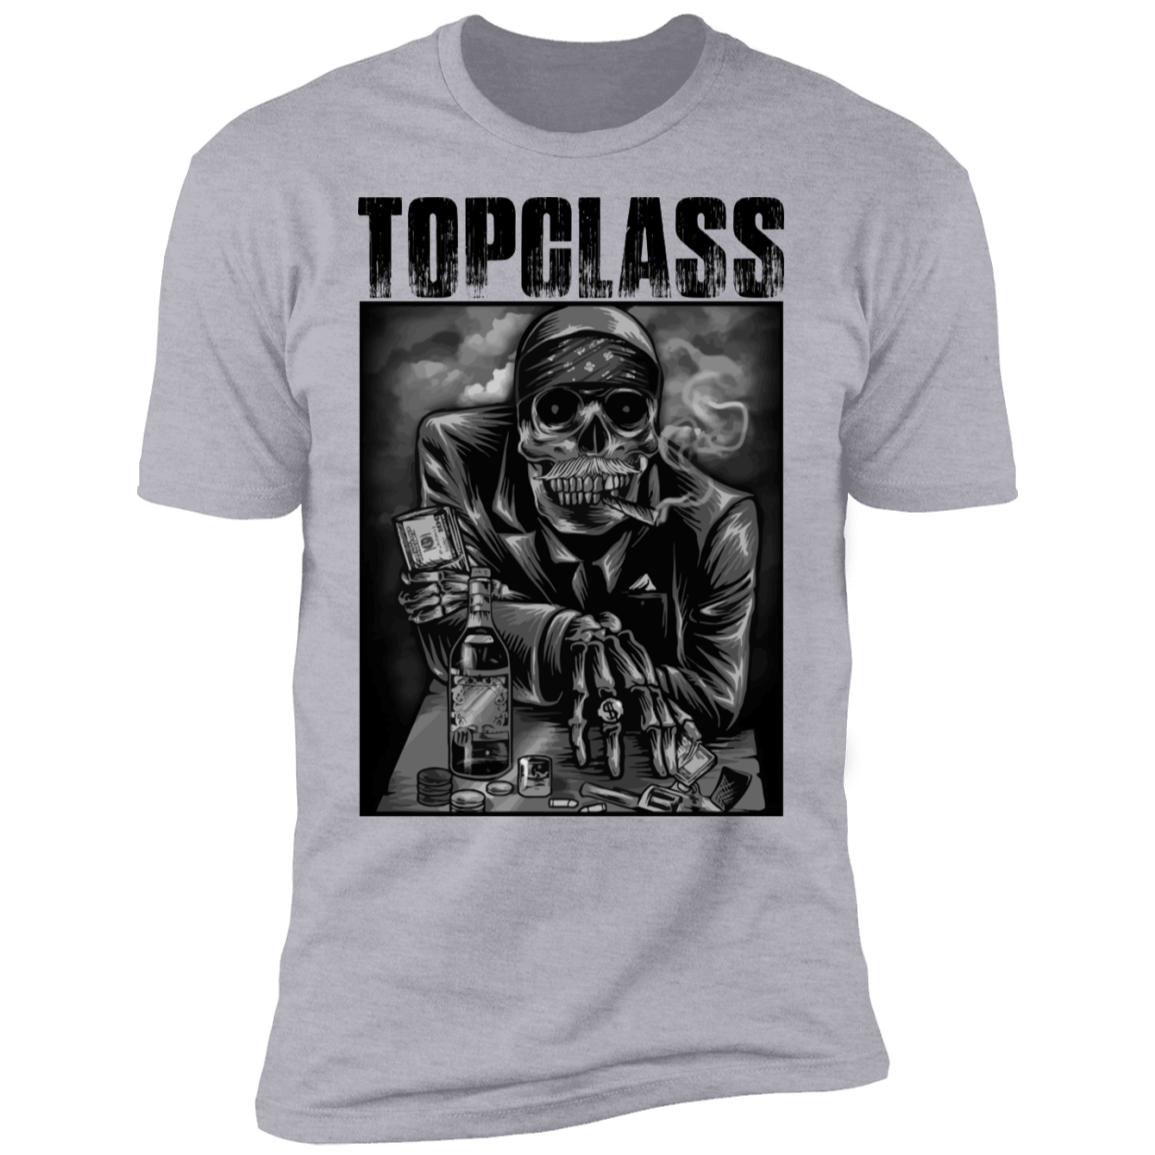 Topclass gangster skeleton - Topclass Mafia